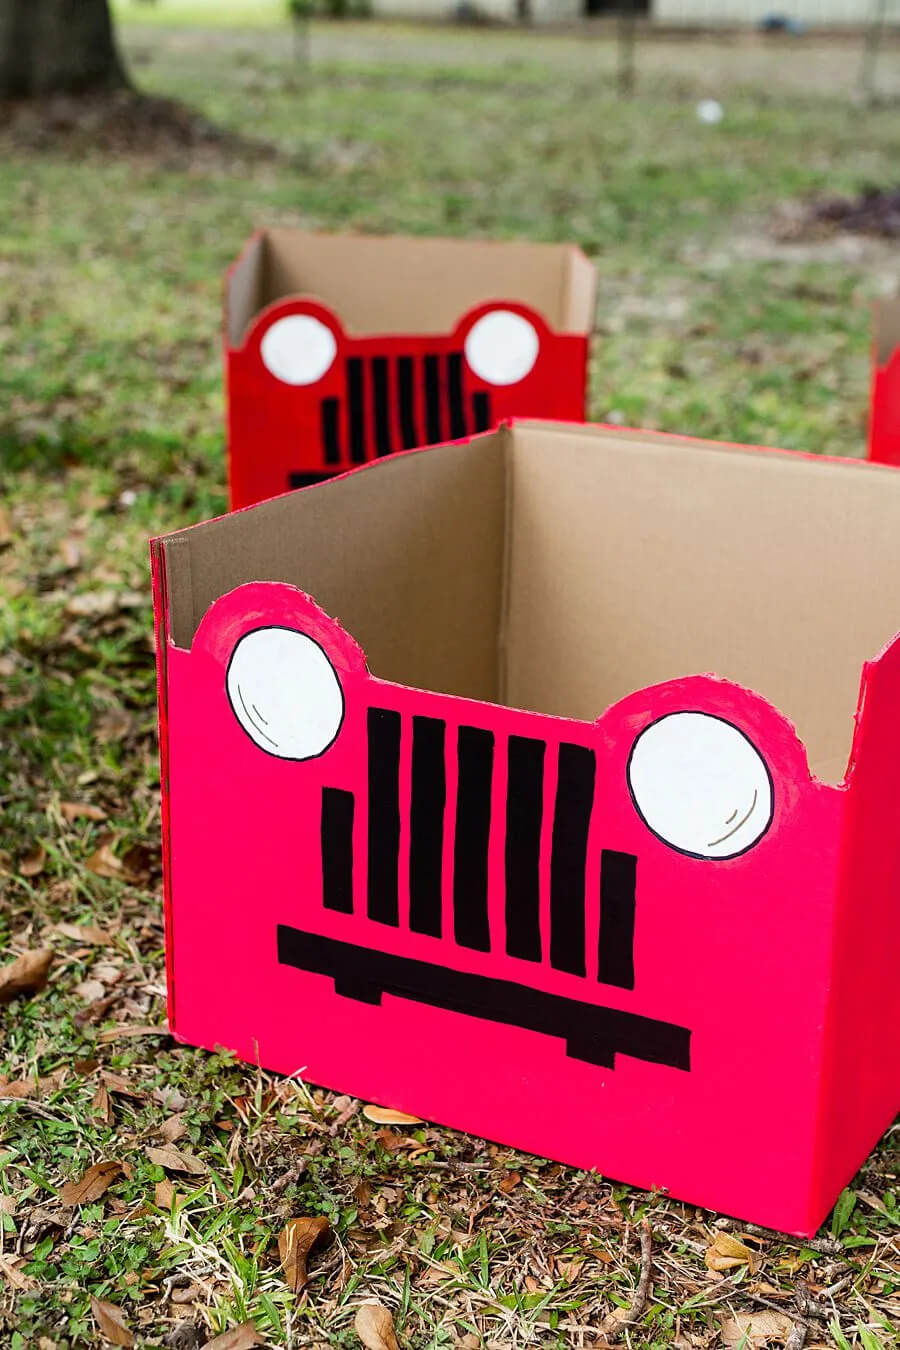 Cool DIY Cardboard Jeep Car Craft for ToddlersDIY Cardboard Vehicles Ideas for Kids